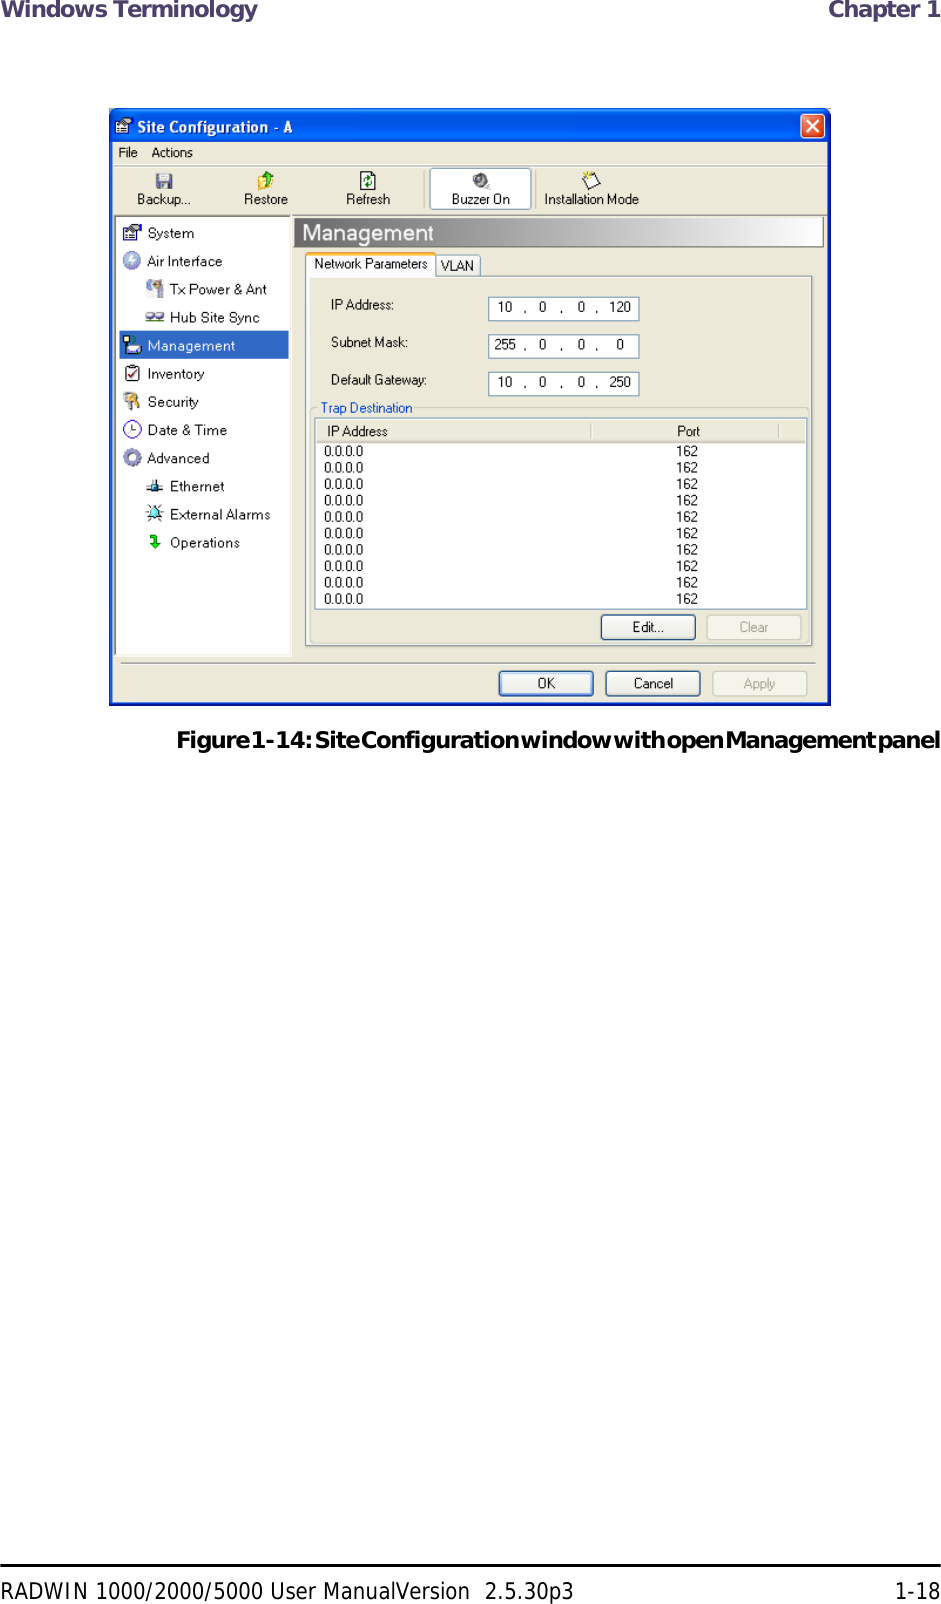 Windows Terminology  Chapter 1RADWIN 1000/2000/5000 User ManualVersion  2.5.30p3 1-18Figure 1-14: Site Configuration window with open Management panel